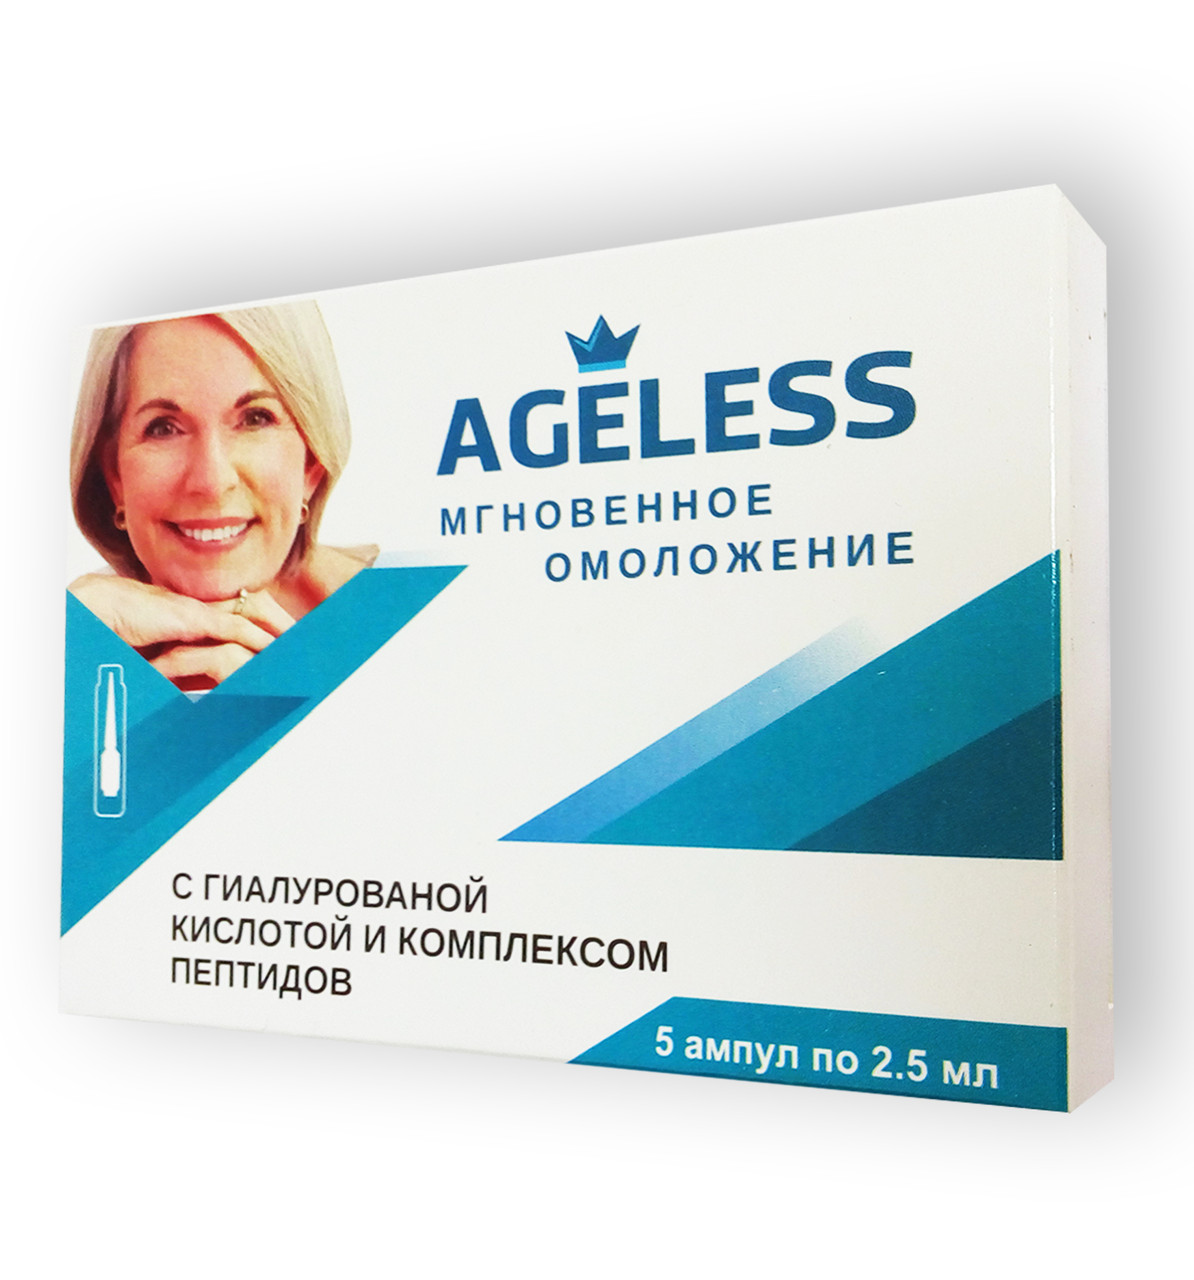 Ageless — Ампули миттєвого омолодження (Агелесс)